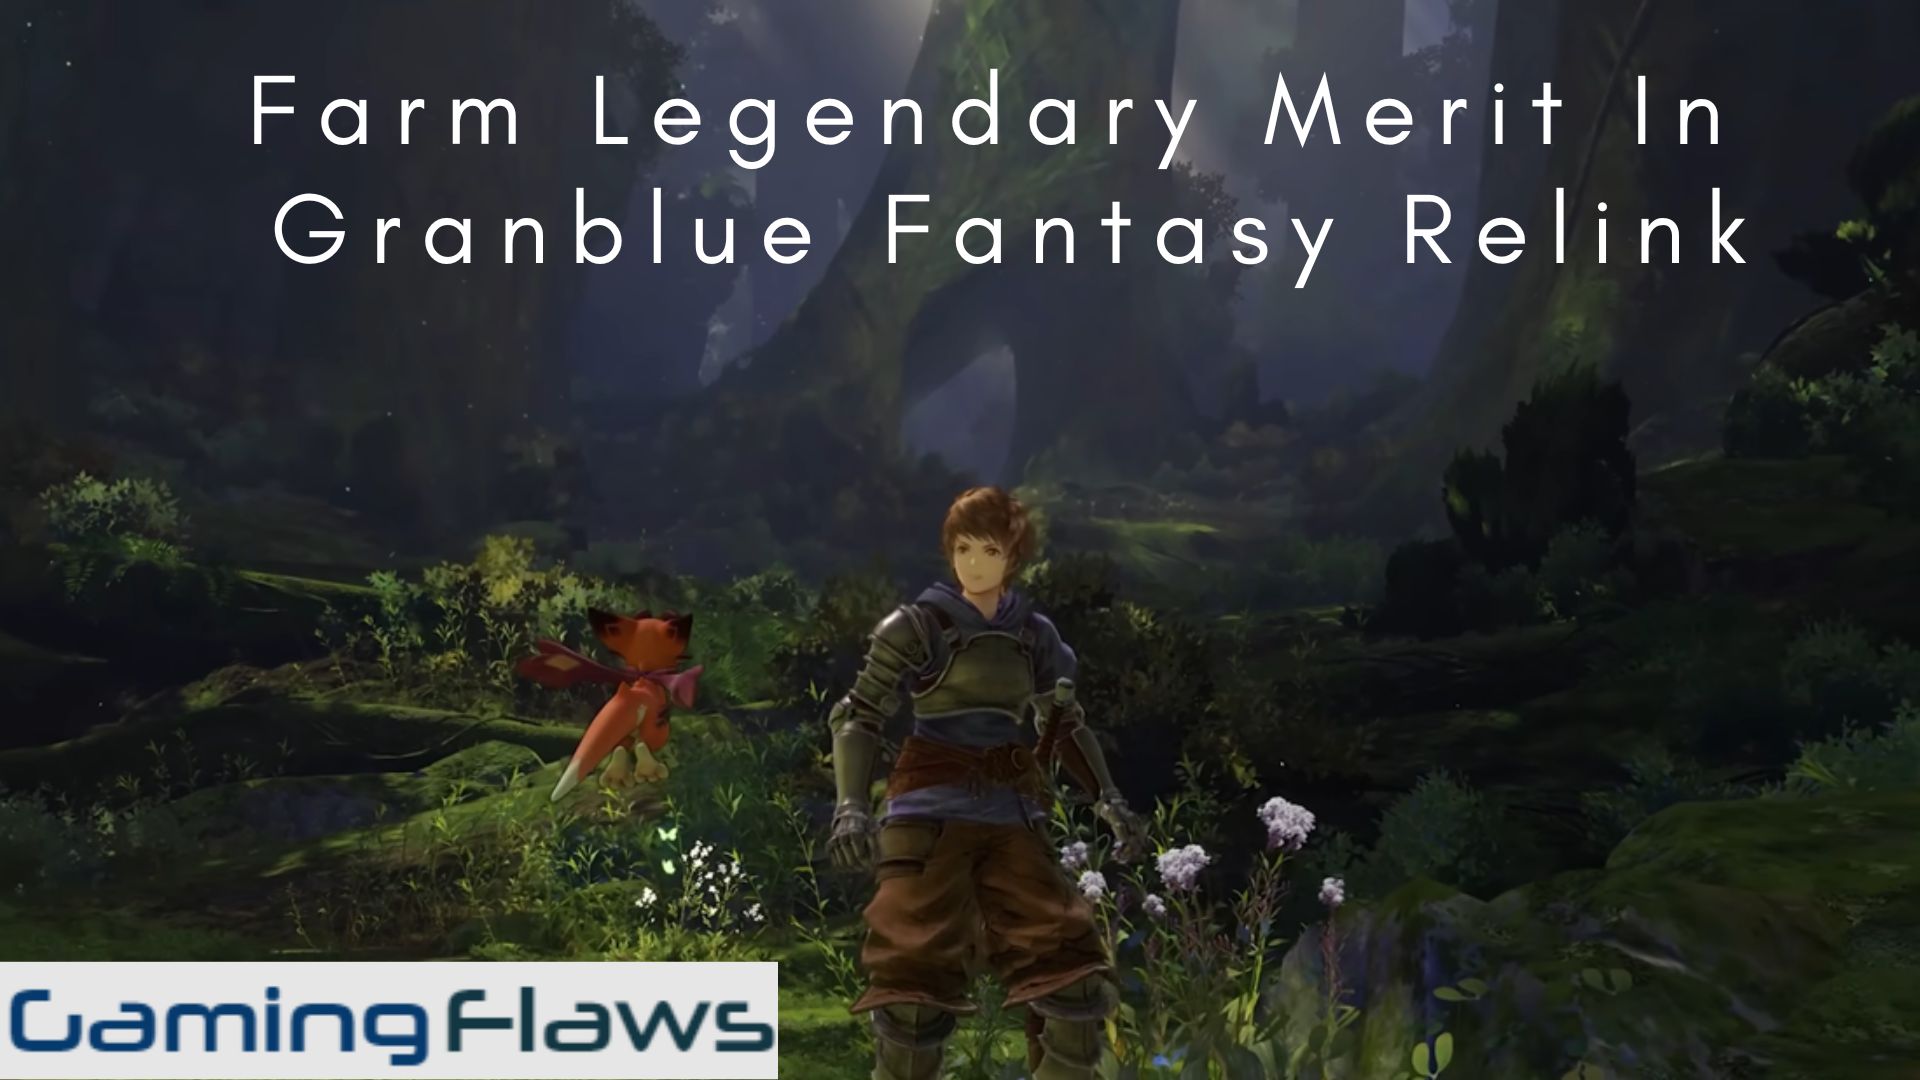 Farm Legendary Merit In Granblue Fantasy Relink